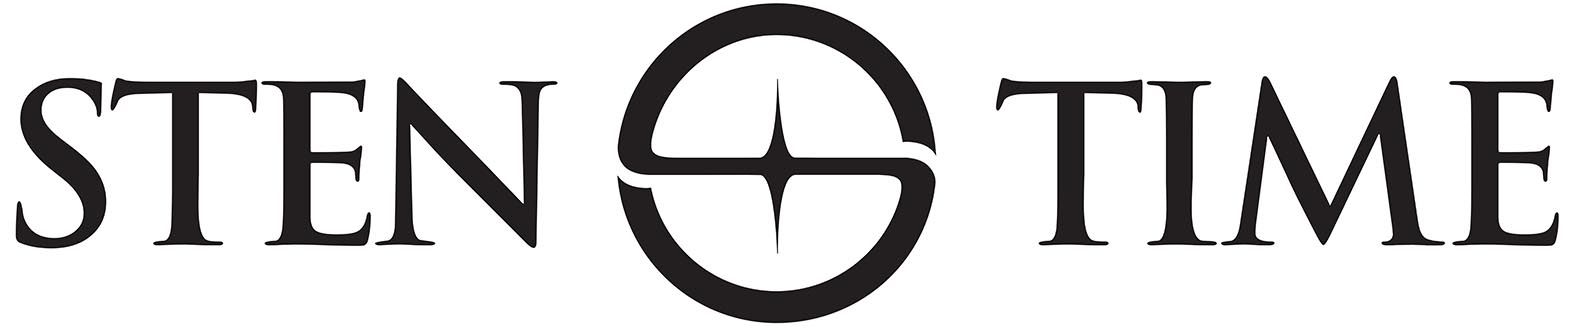 STENTIME logo 2017NEW bel 005